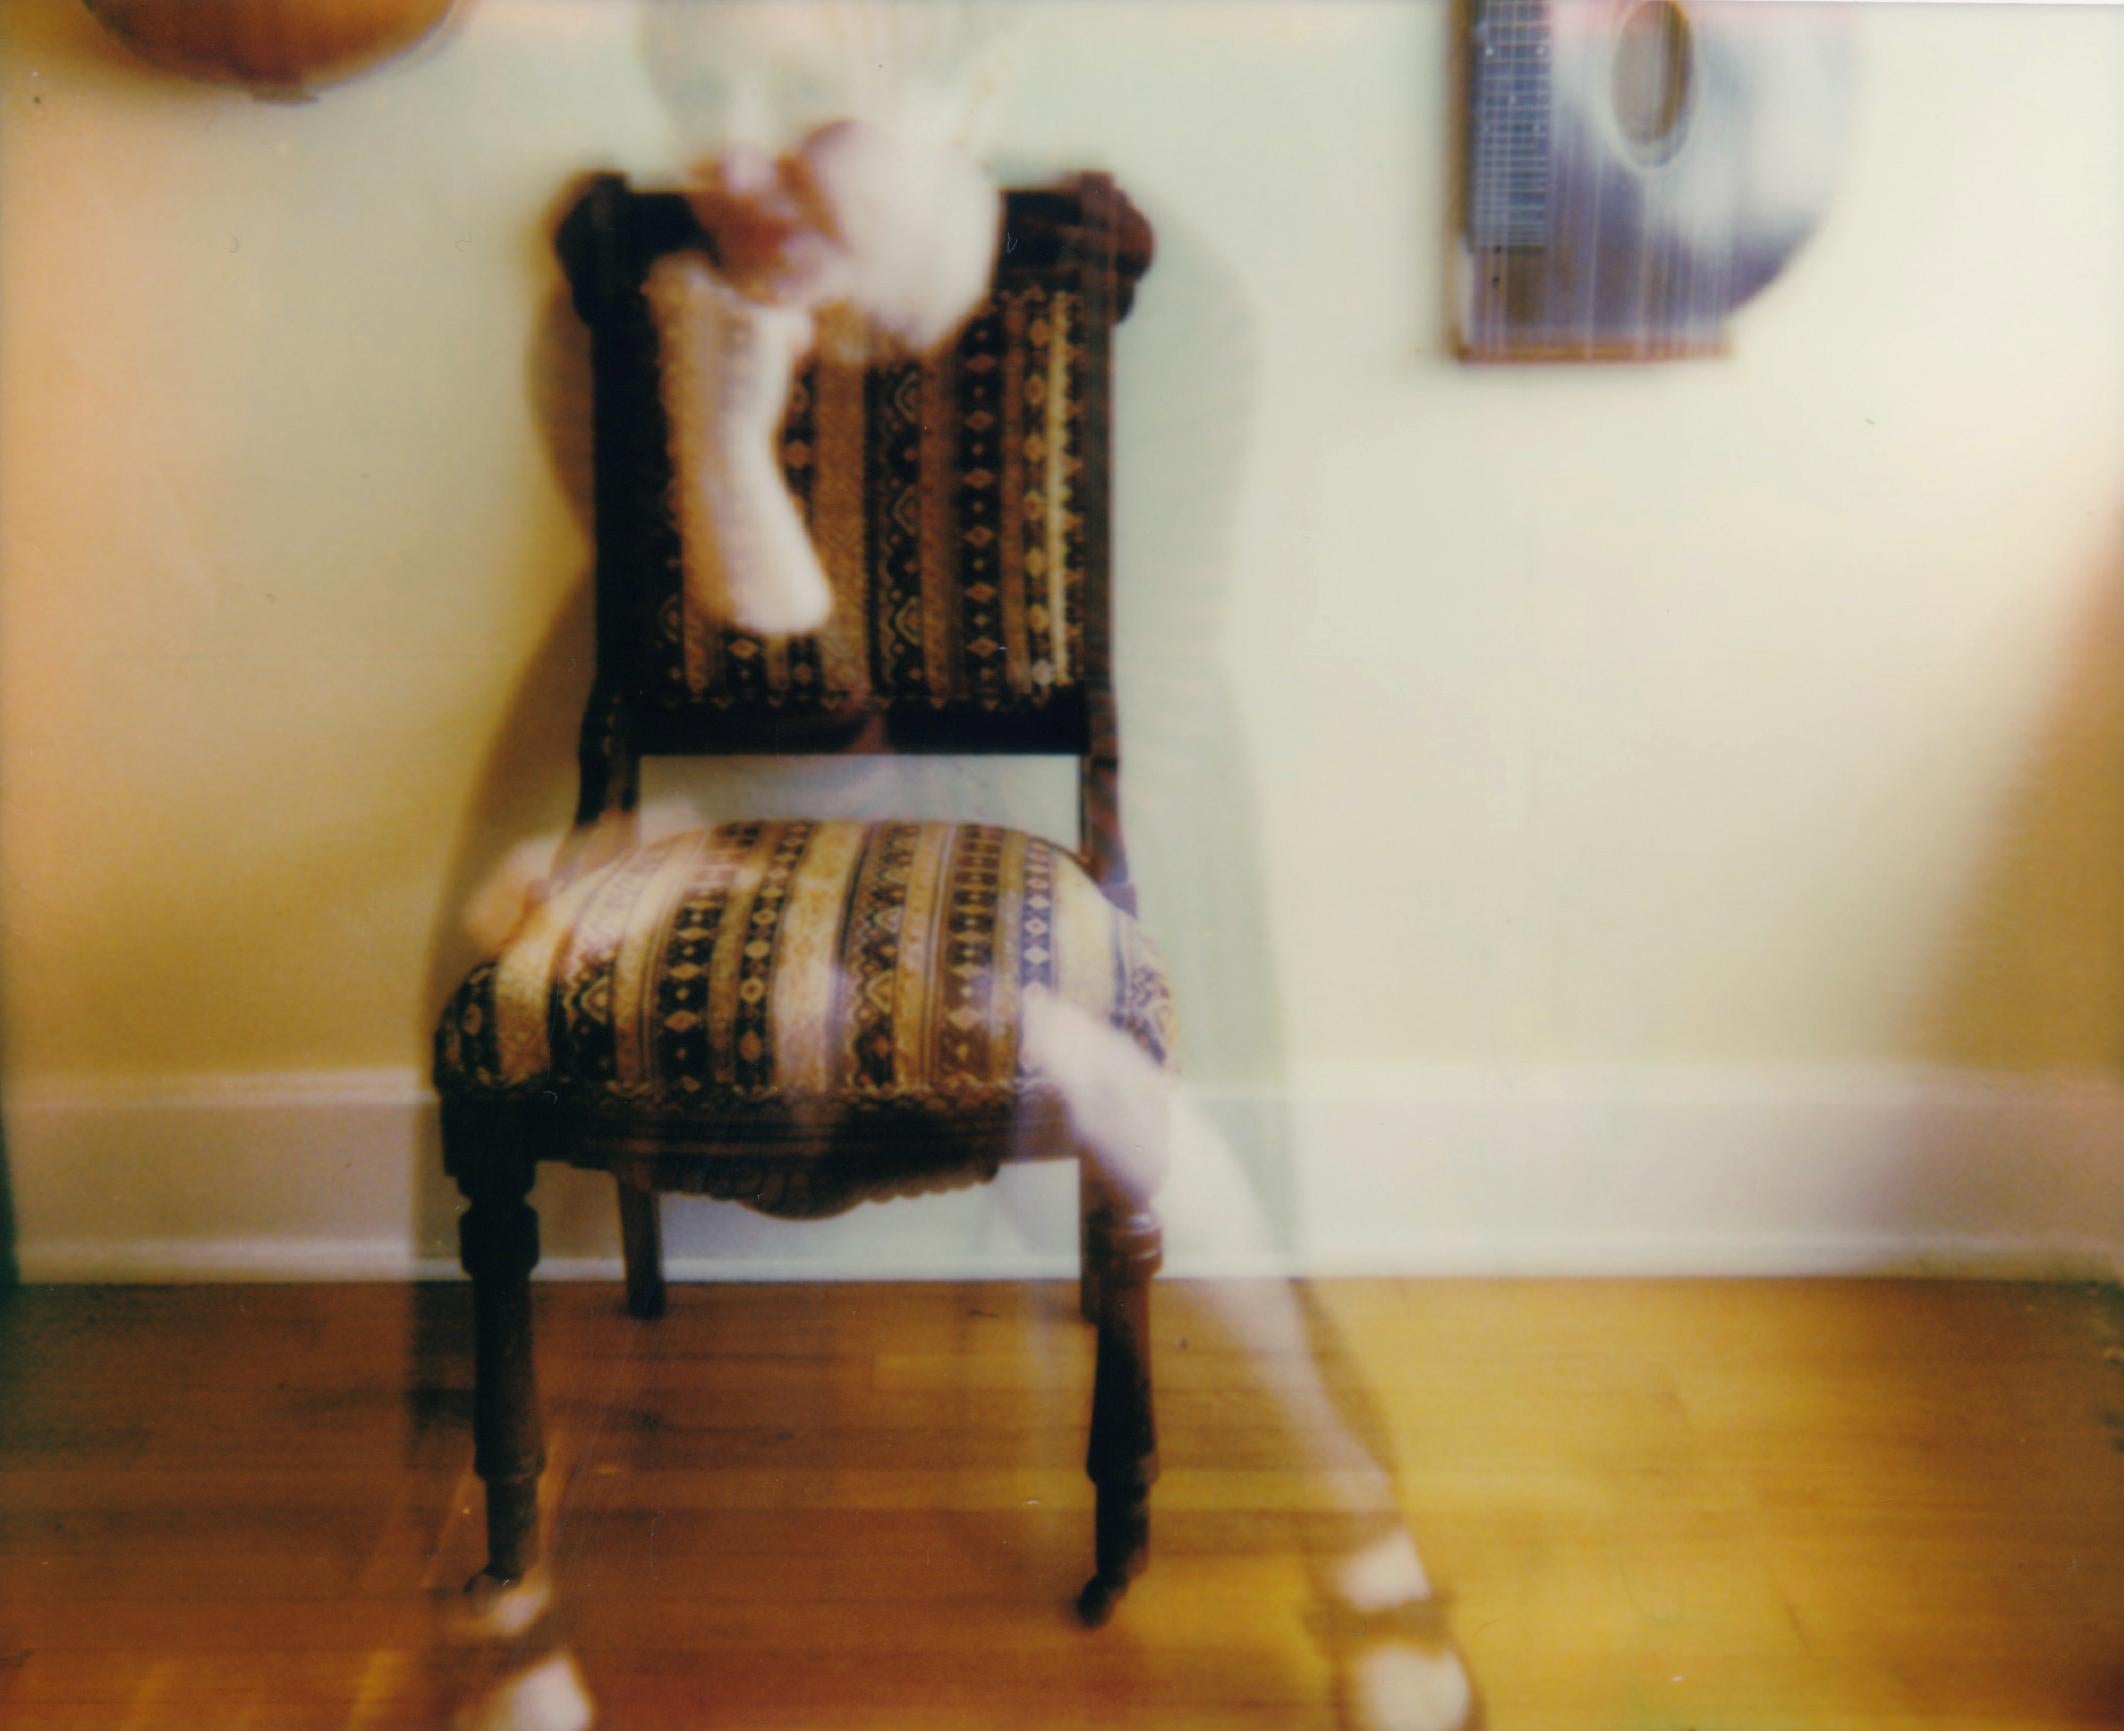 Coming into Focus - Contemporary, Woman, Polaroid, Photograph, 21st Century